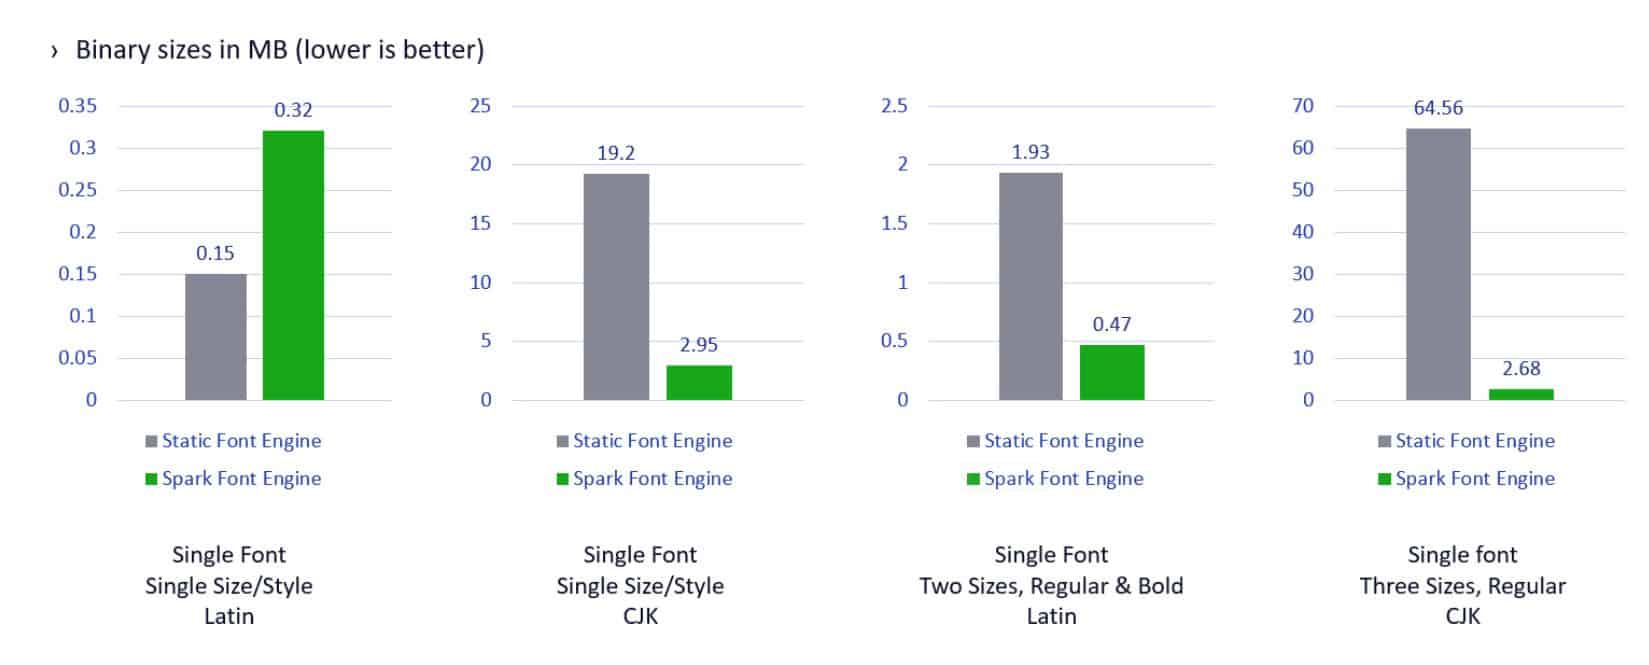 Spark 字体引擎与 Static 字体引擎基准性能测试对比